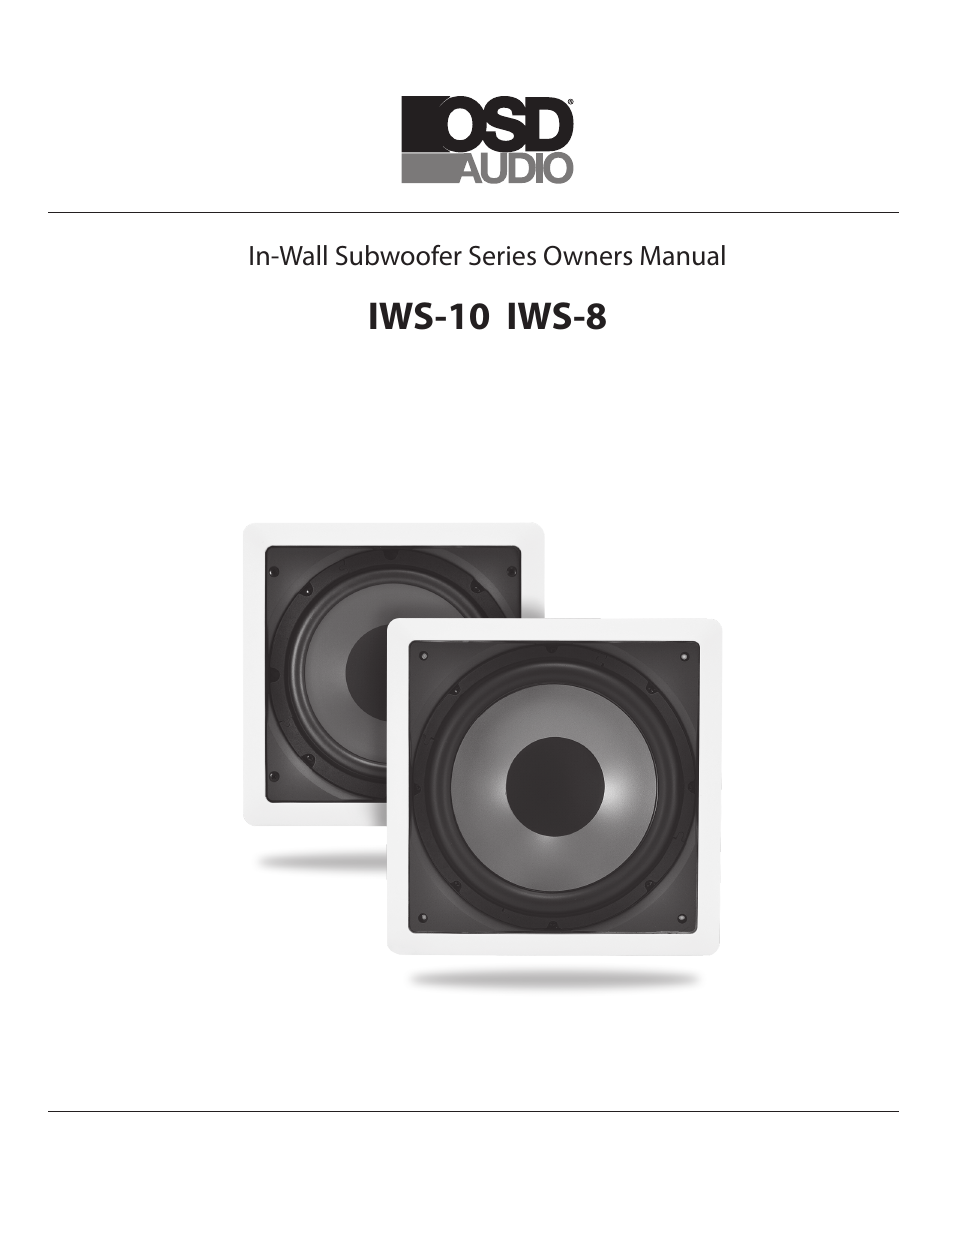 IWS-10